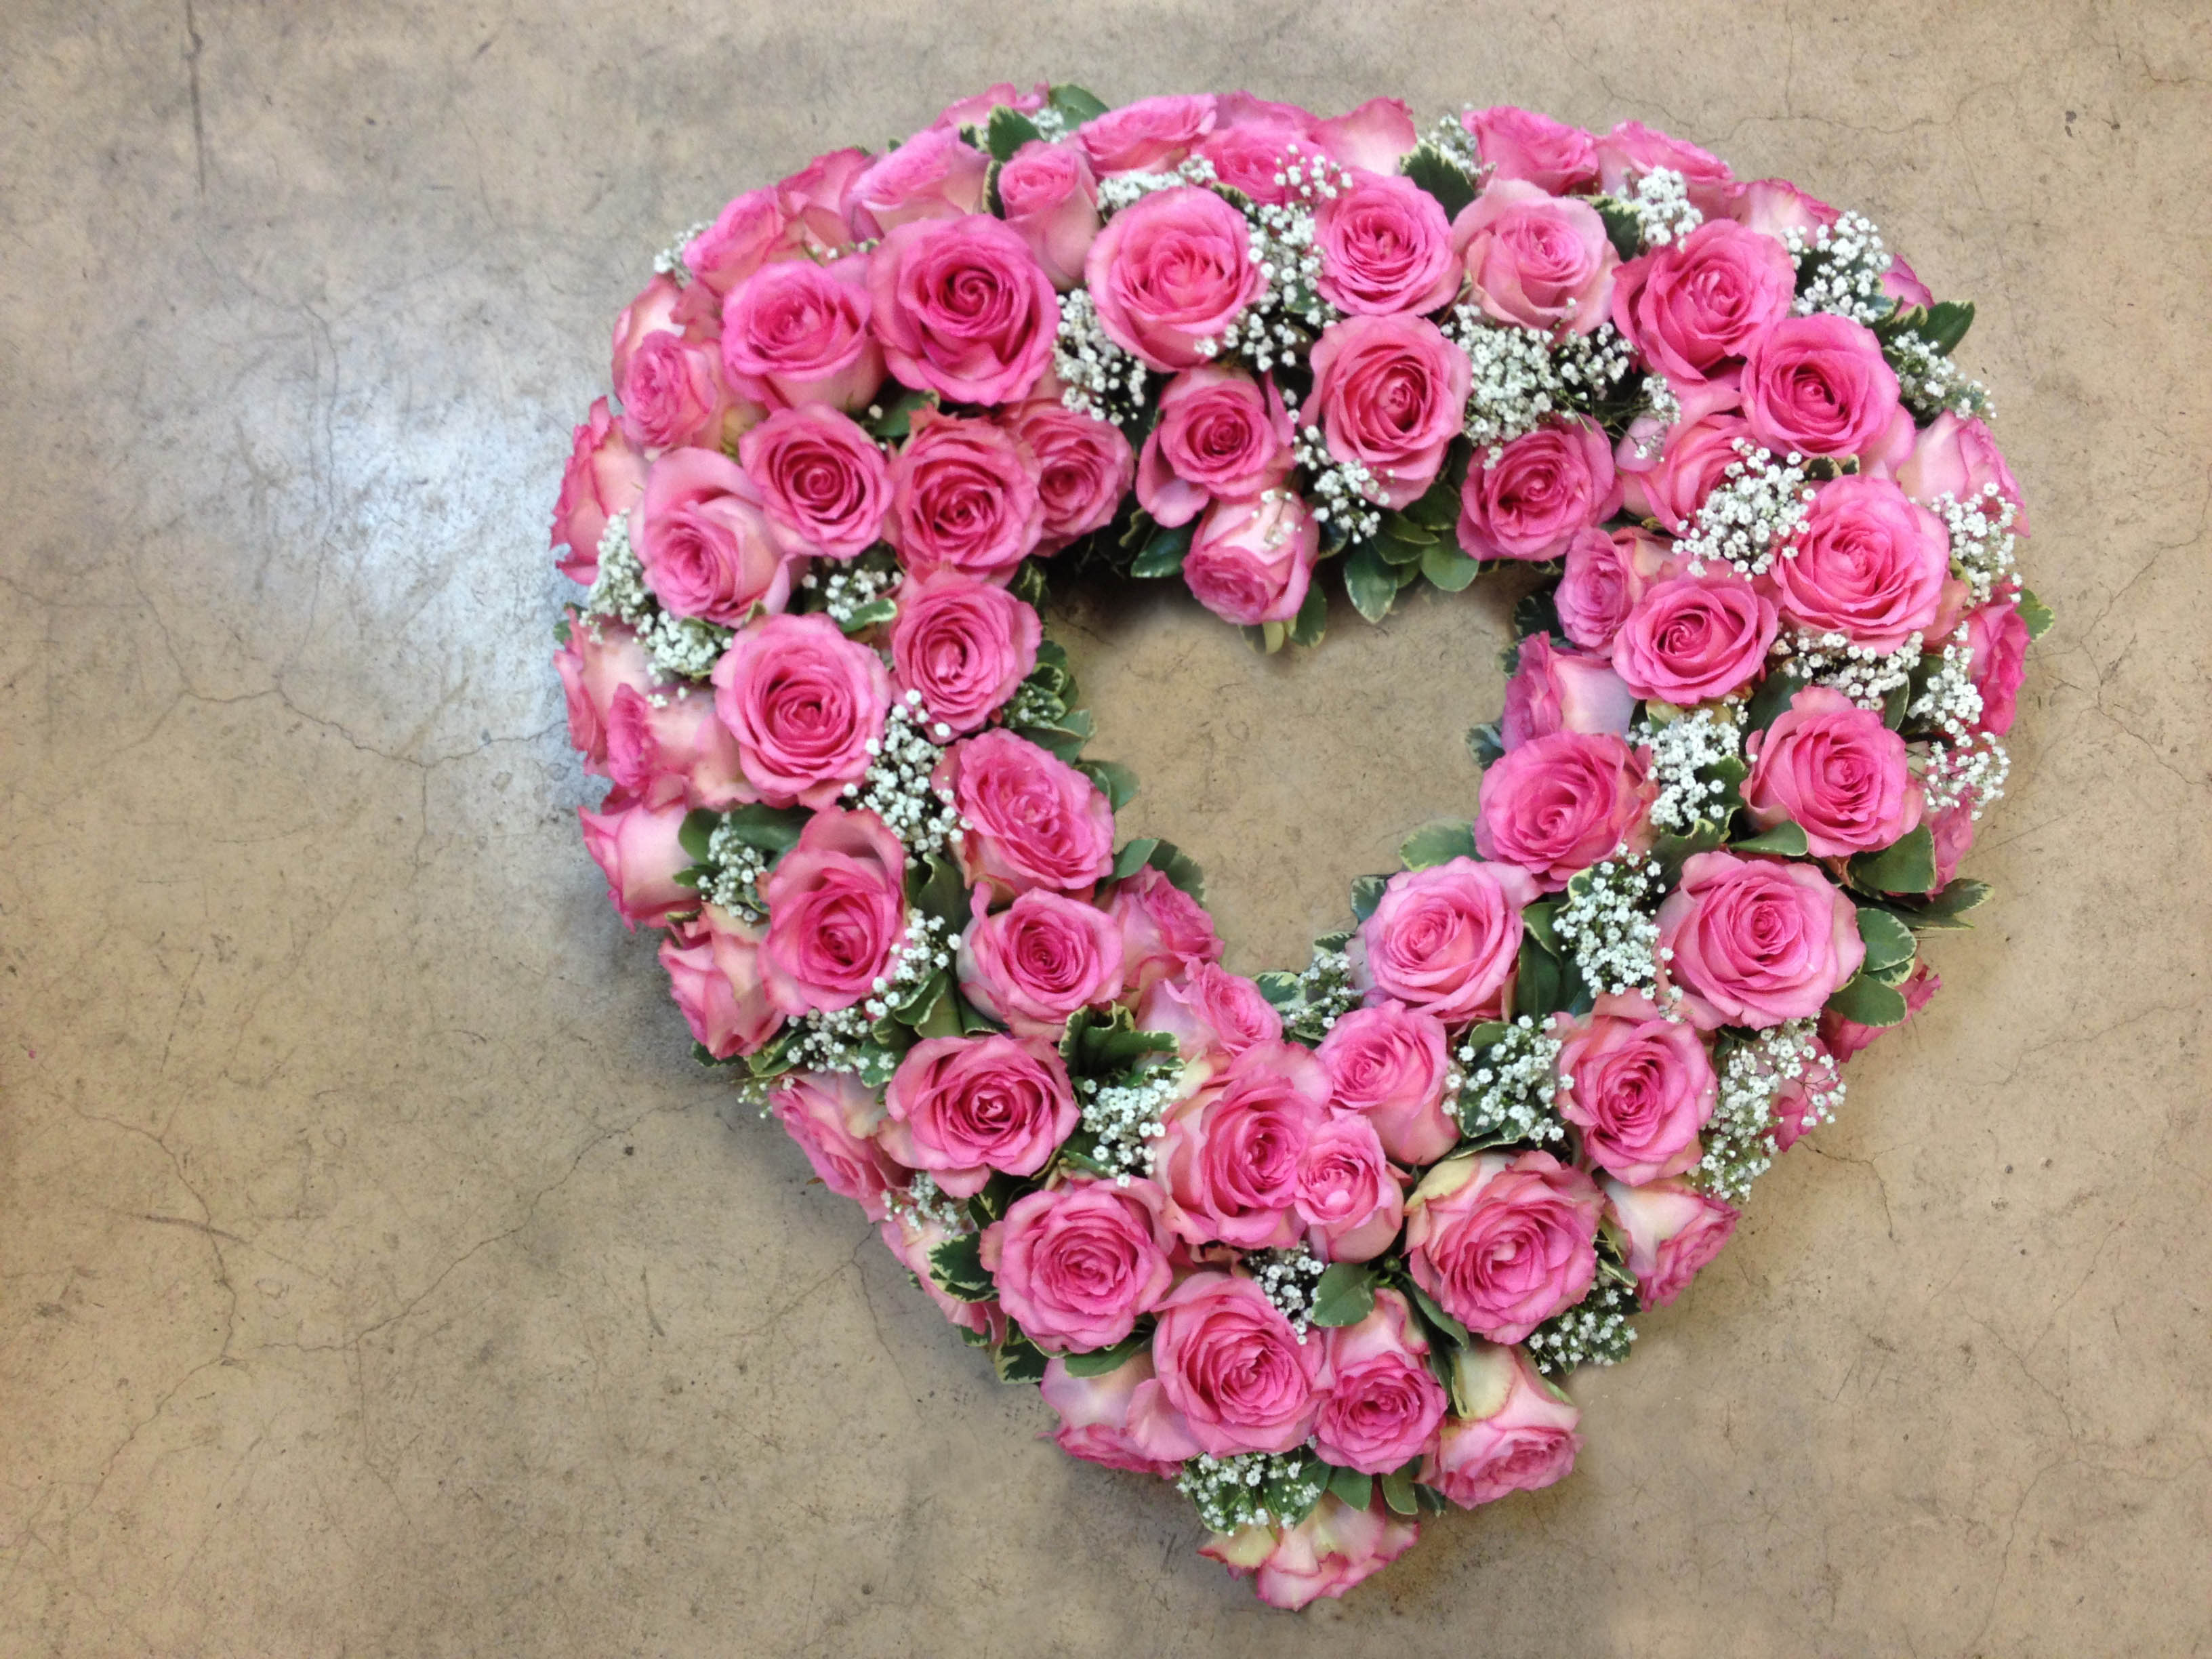 Floral Designer Spotlight: Nelson - Freytag’s Florist - Austin, TX